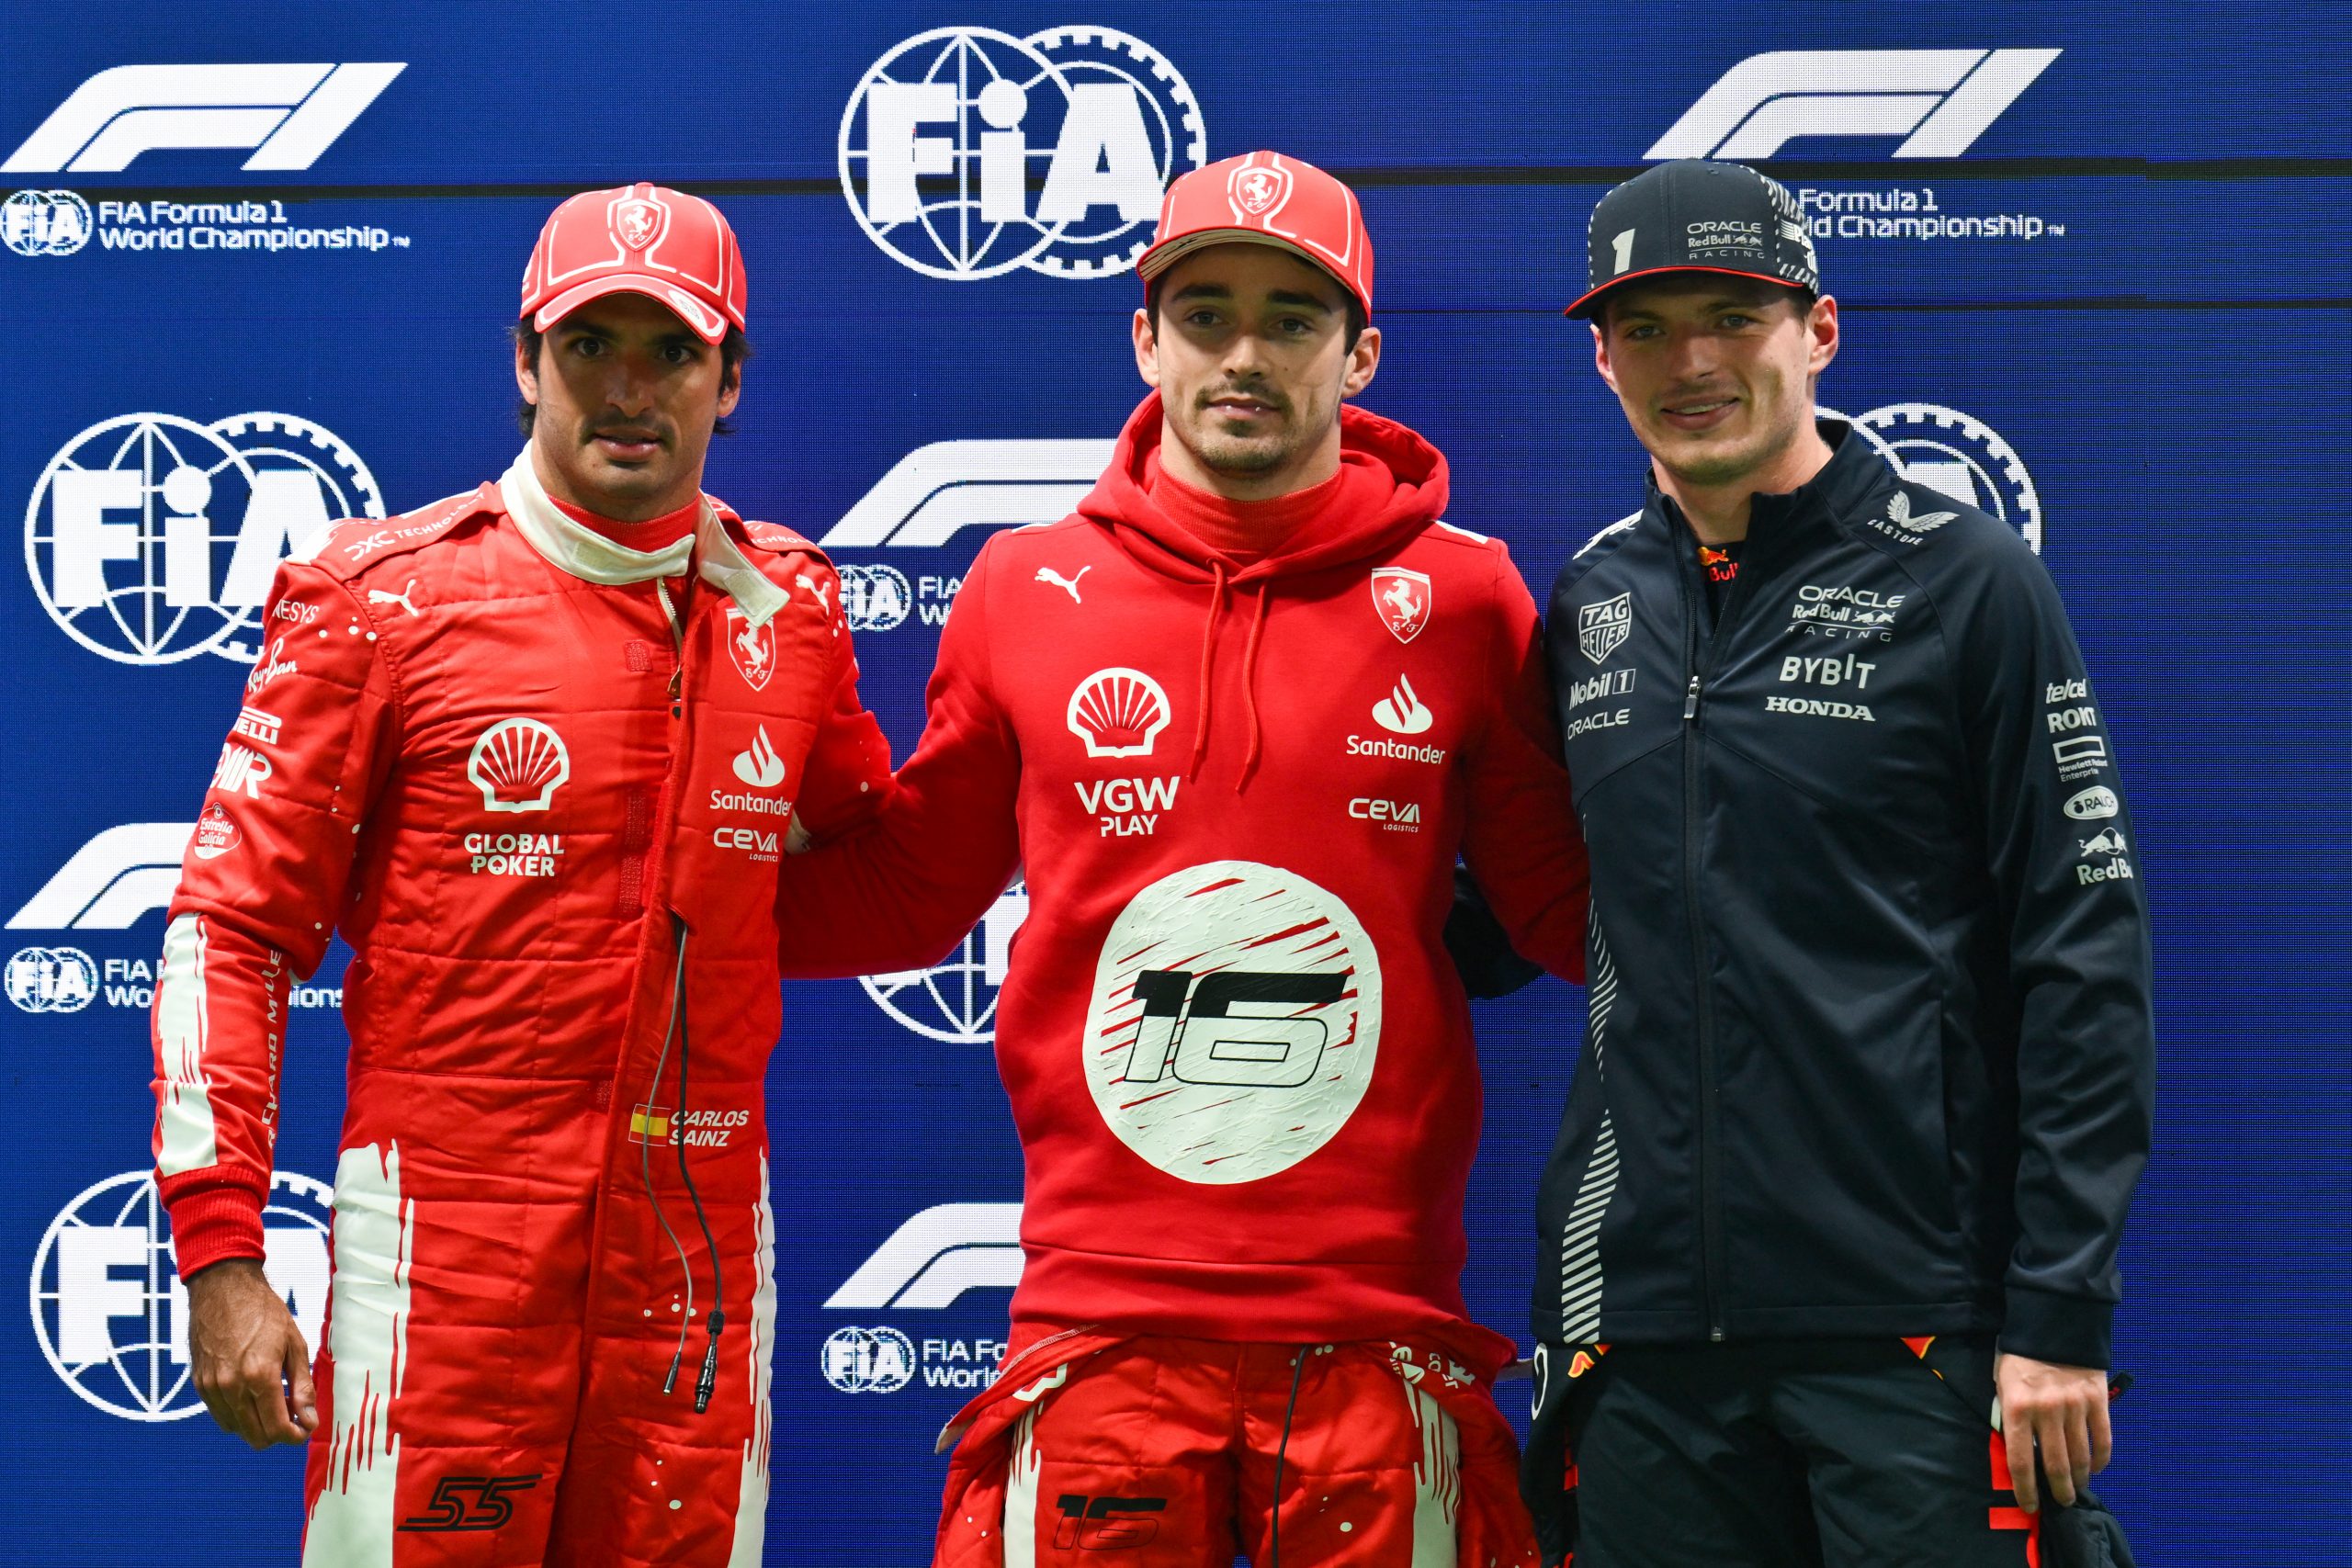 Ferrari's Charles Leclerc to Begin F1 Las Vegas Grand Prix on Pole